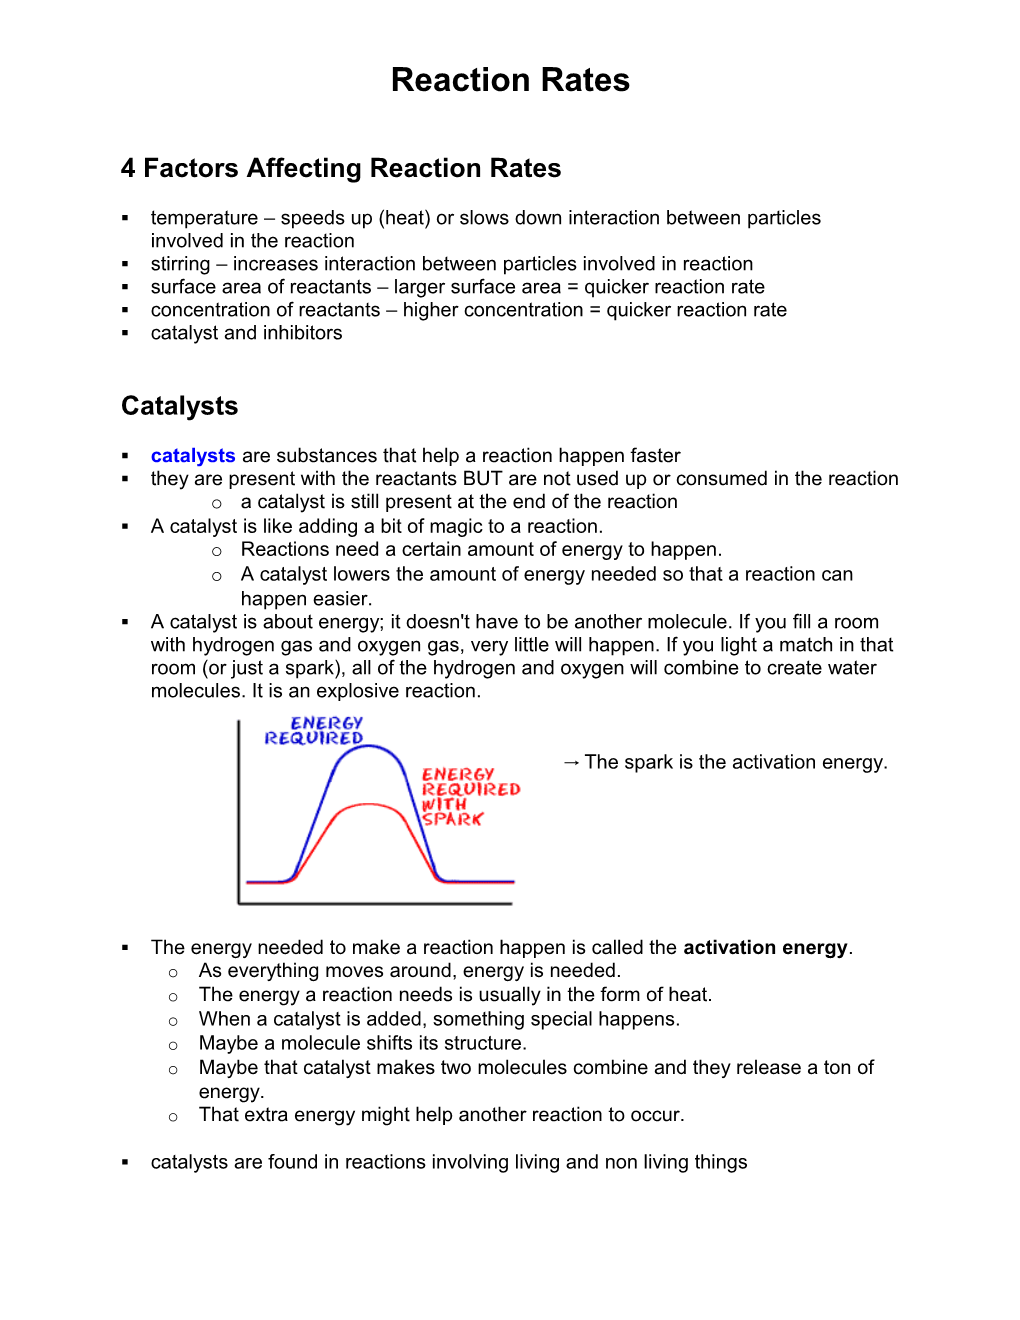 4 Factors Affecting Reaction Rates